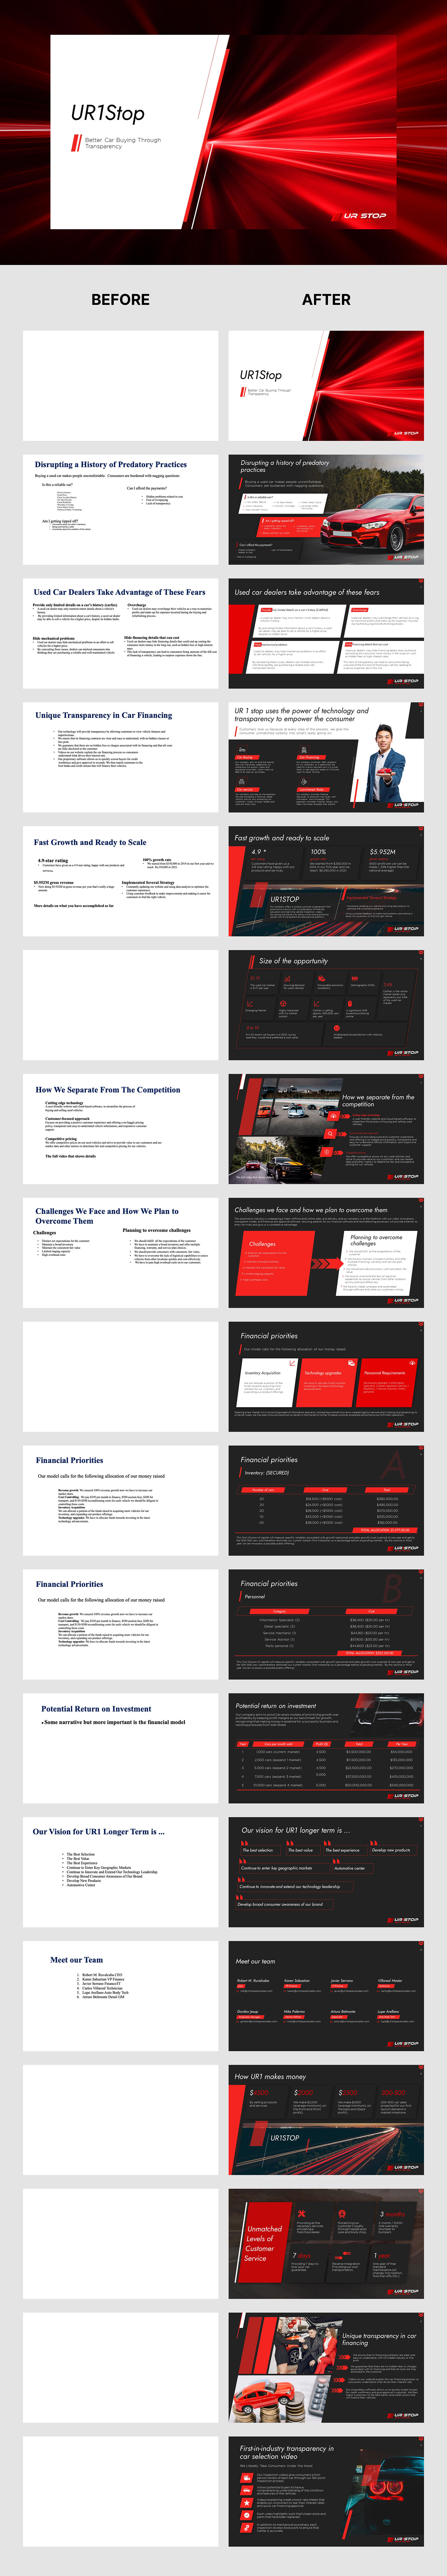 pitch deck presentation design Powerpoint slides investor pitch deck Google Slides presentation template business brand identity Presentation Redesign